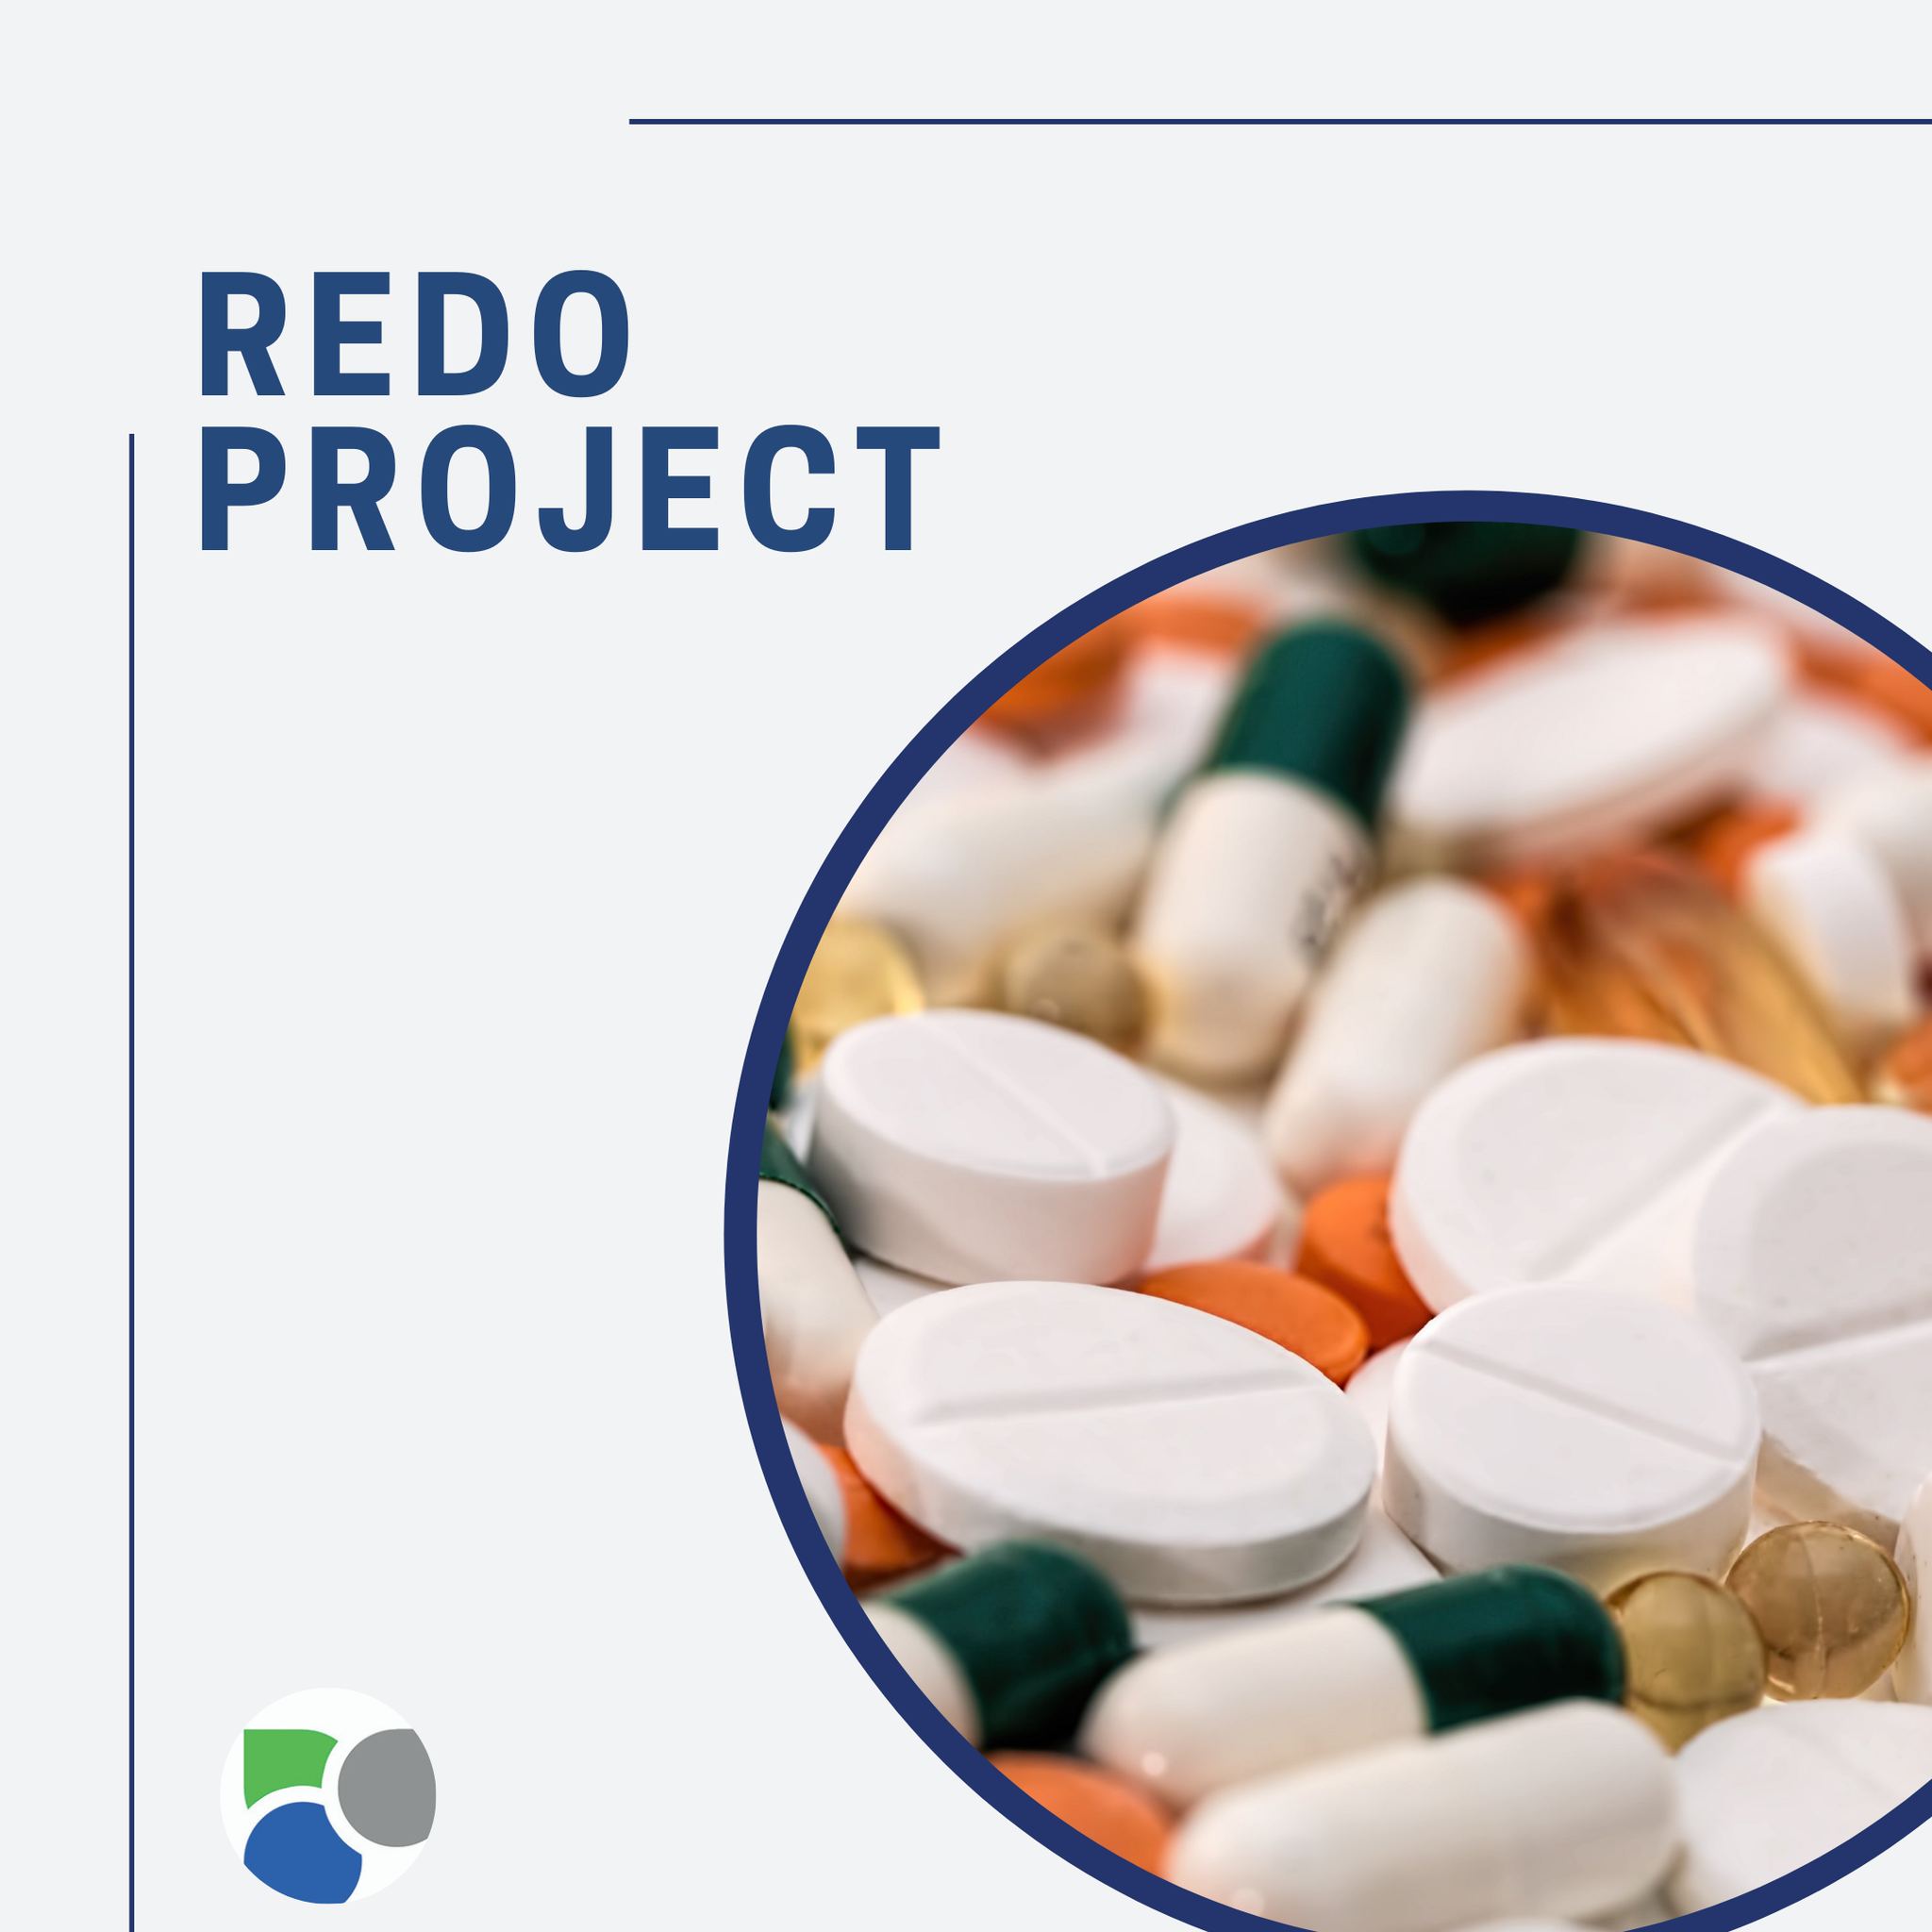 Redo Project